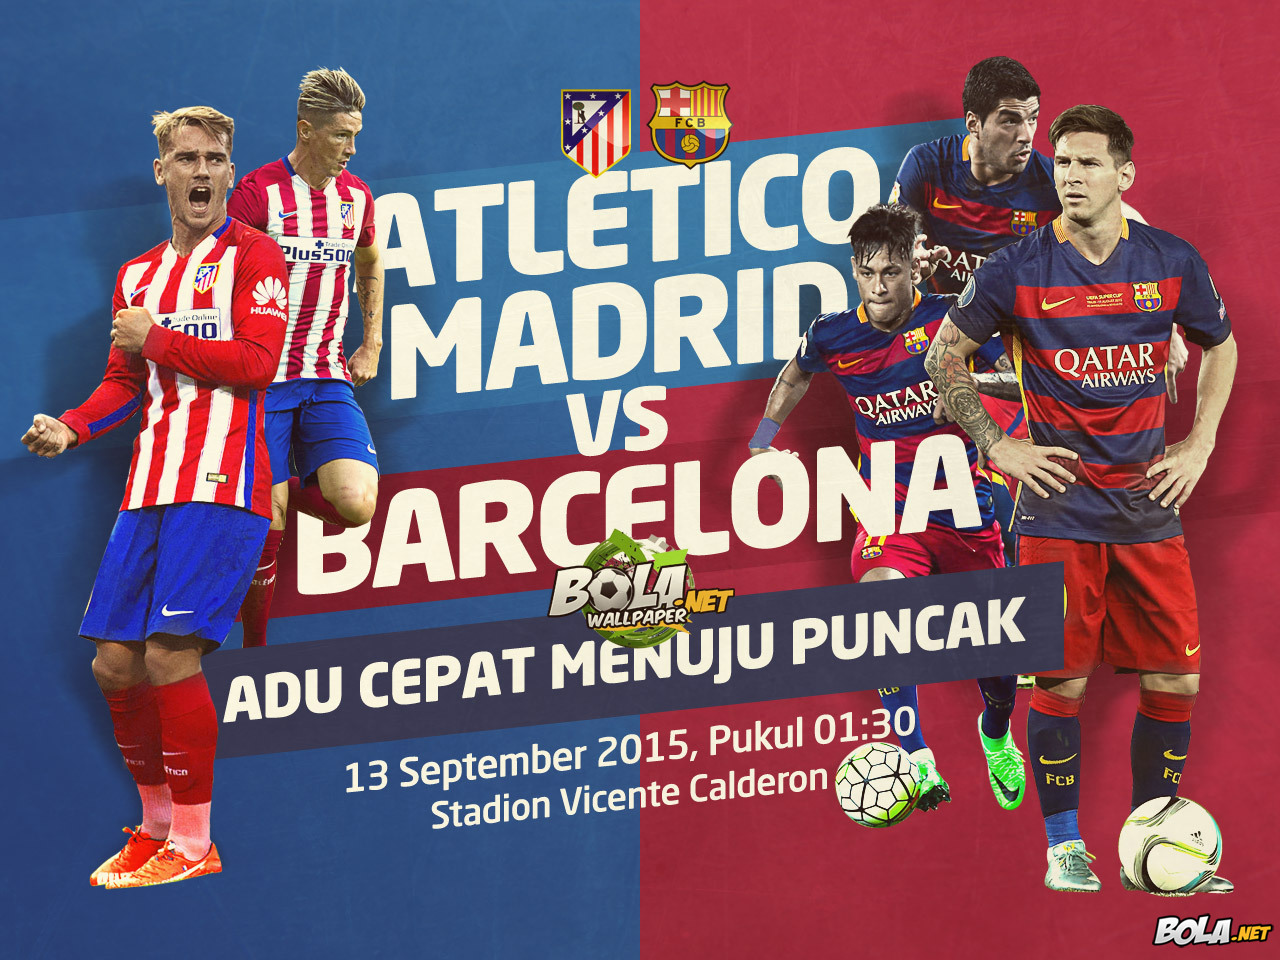 Download Wallpaper Atletico Madrid Vs Barcelona Bolanet